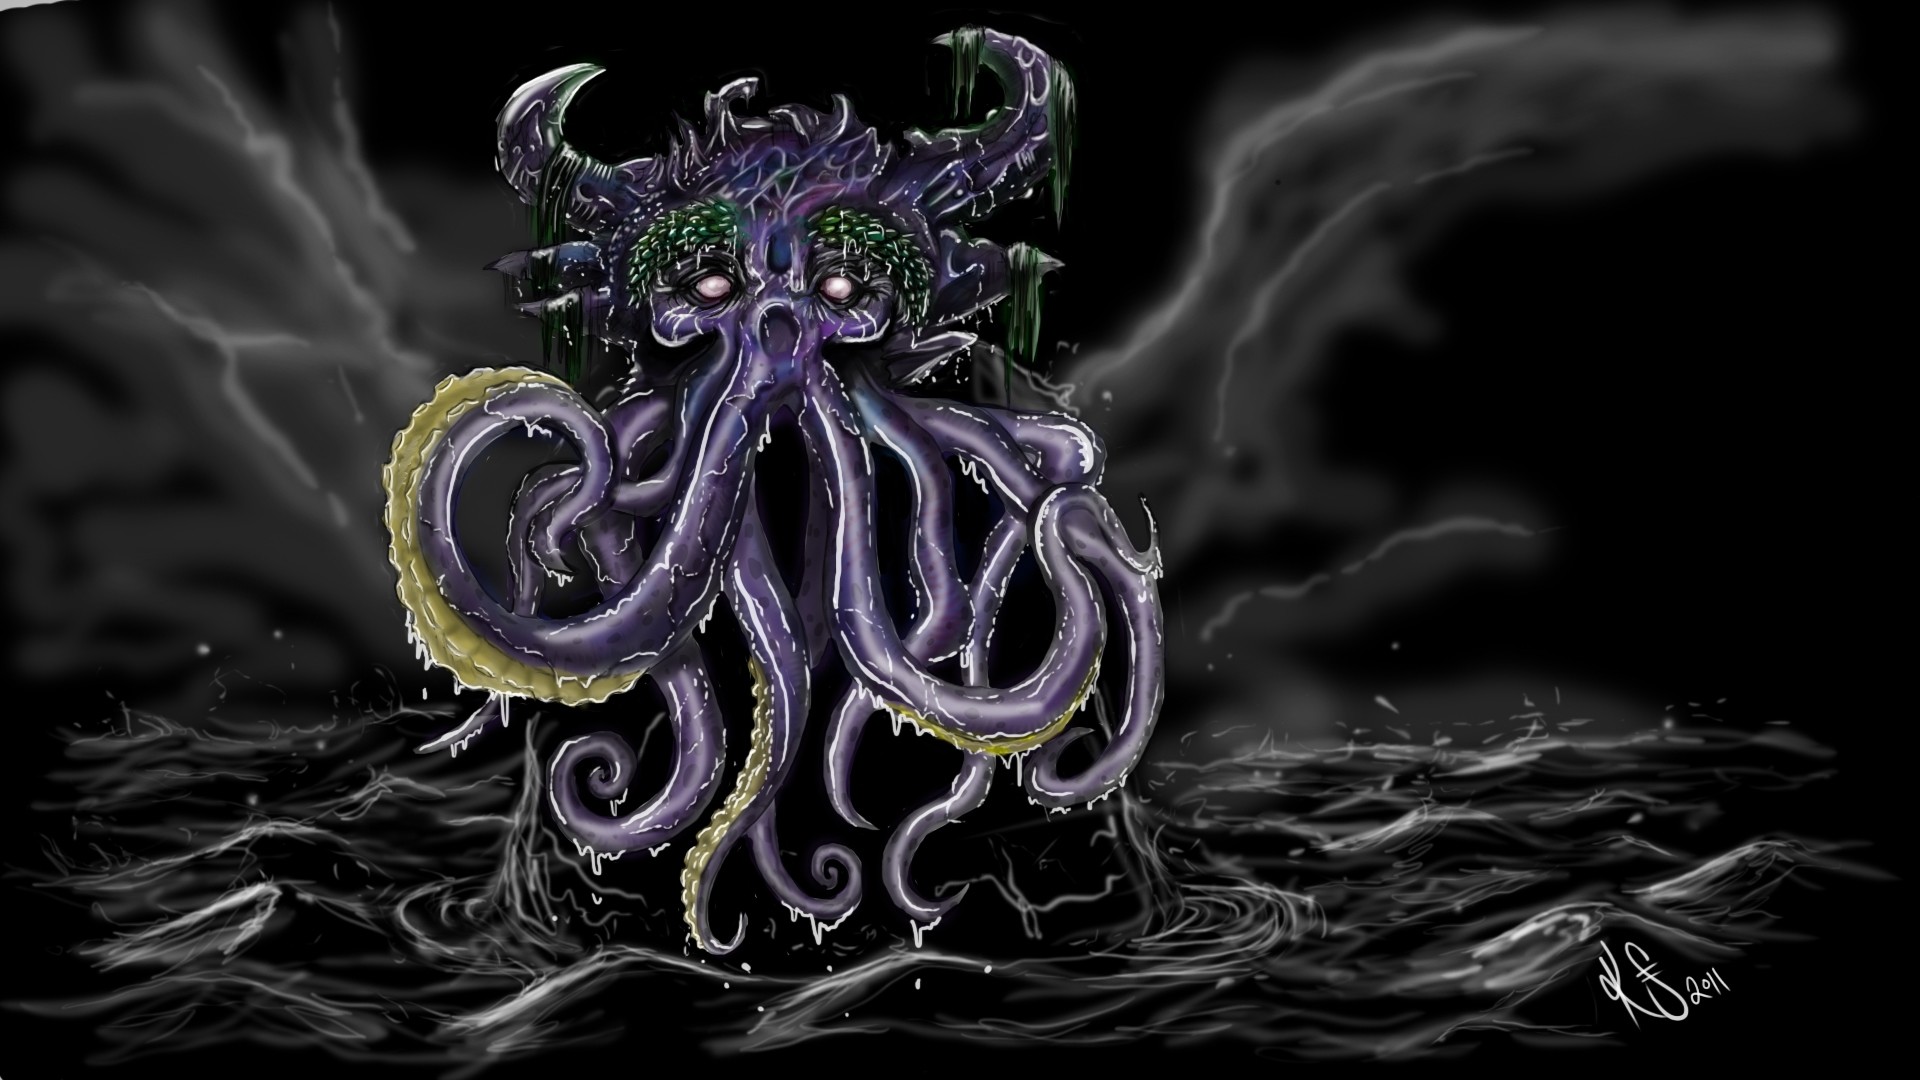 1920x1080 1 fantasy art dark monster creature octopus ocean sea storm sky clouds  waves cthulhu wallpaper |